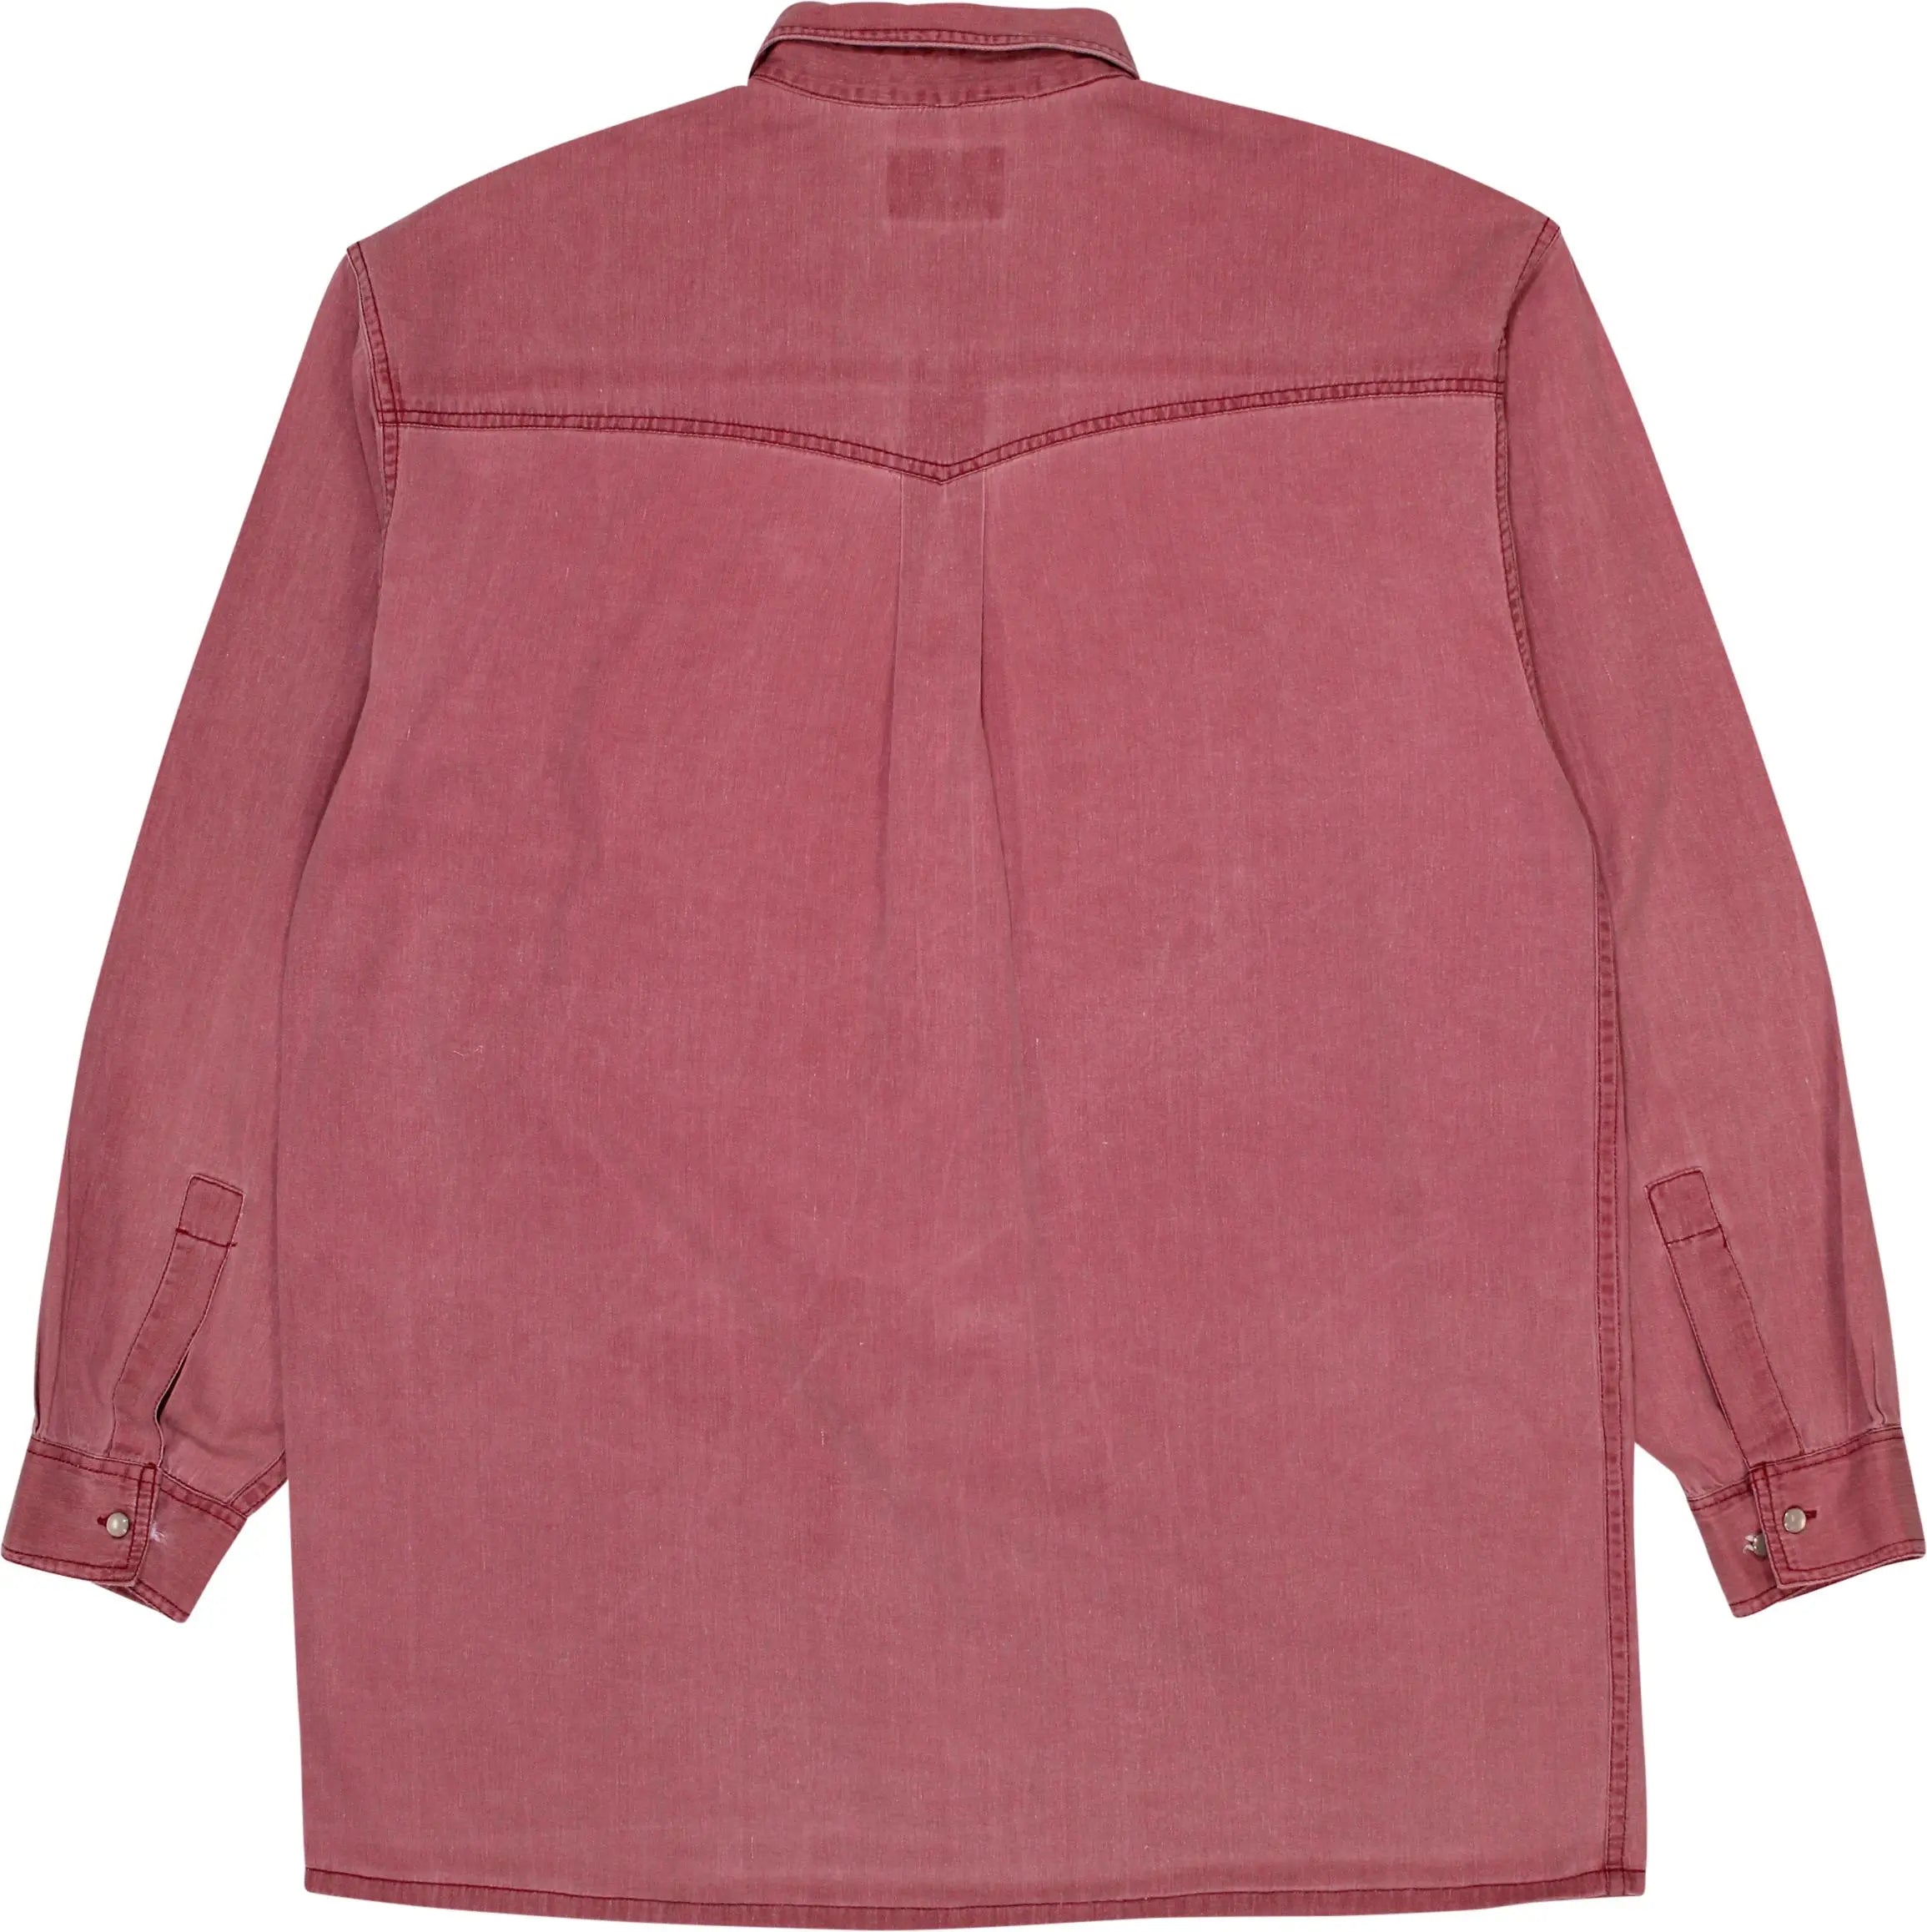 Arizona - Denim Shirt- ThriftTale.com - Vintage and second handclothing